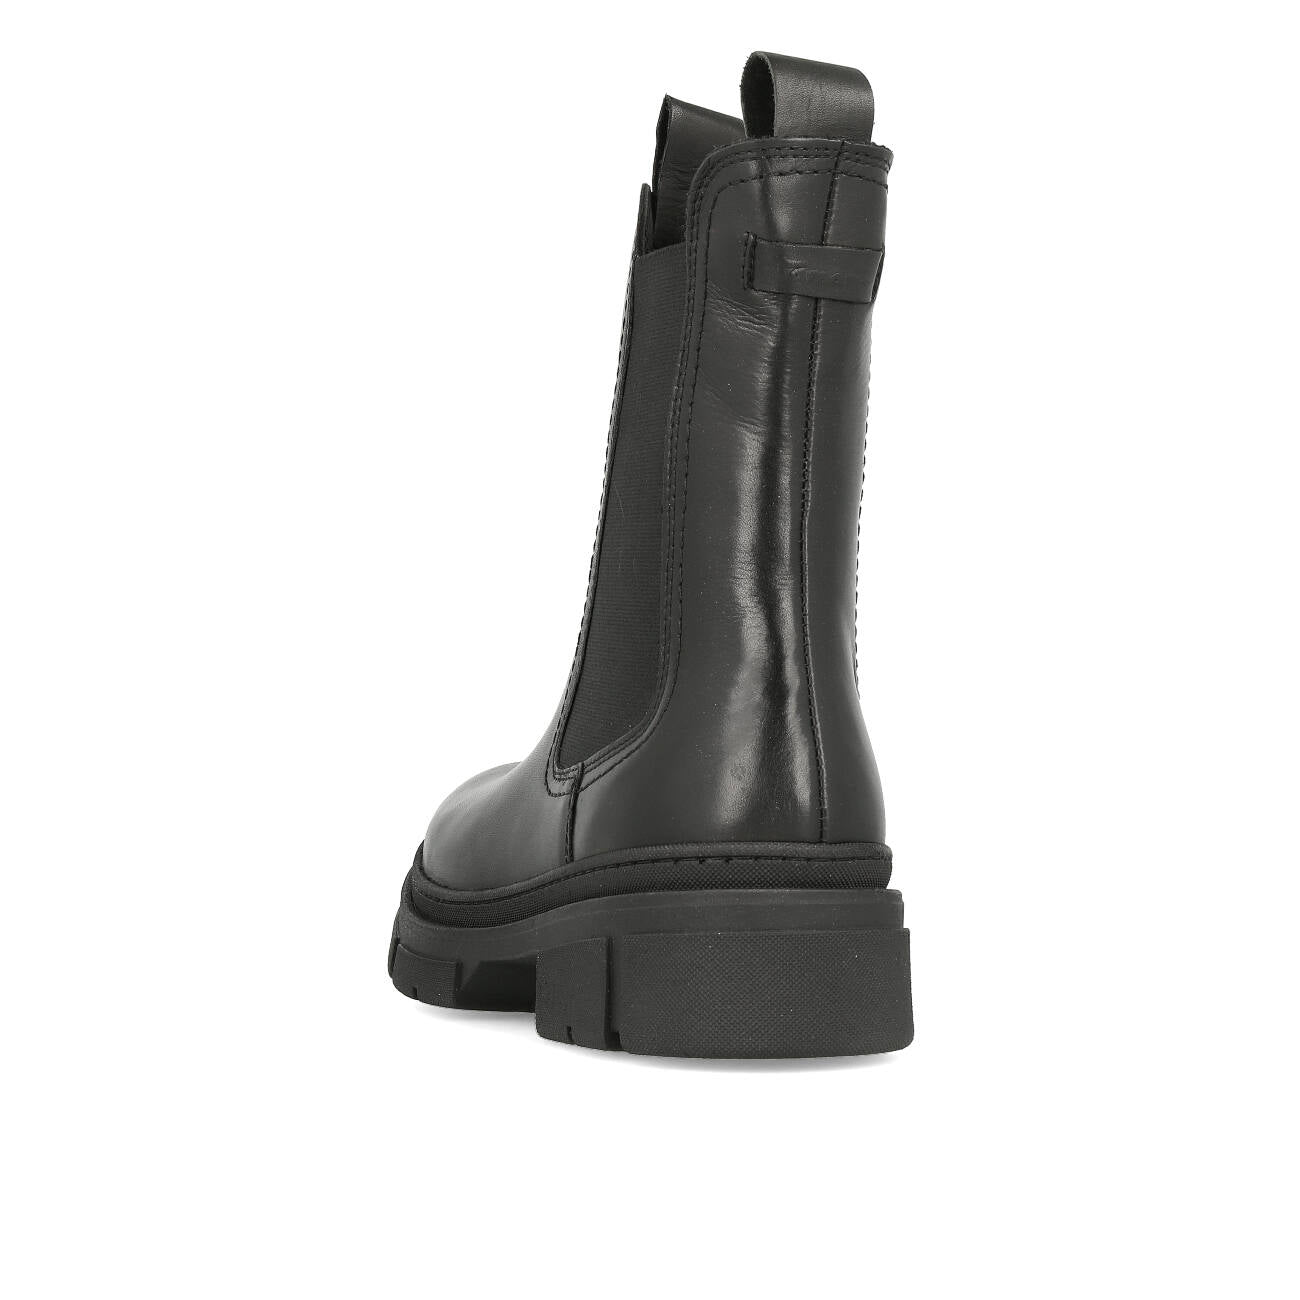 Tamaris 1-25901-41-003 Chelsea Boots Damen Black Leather